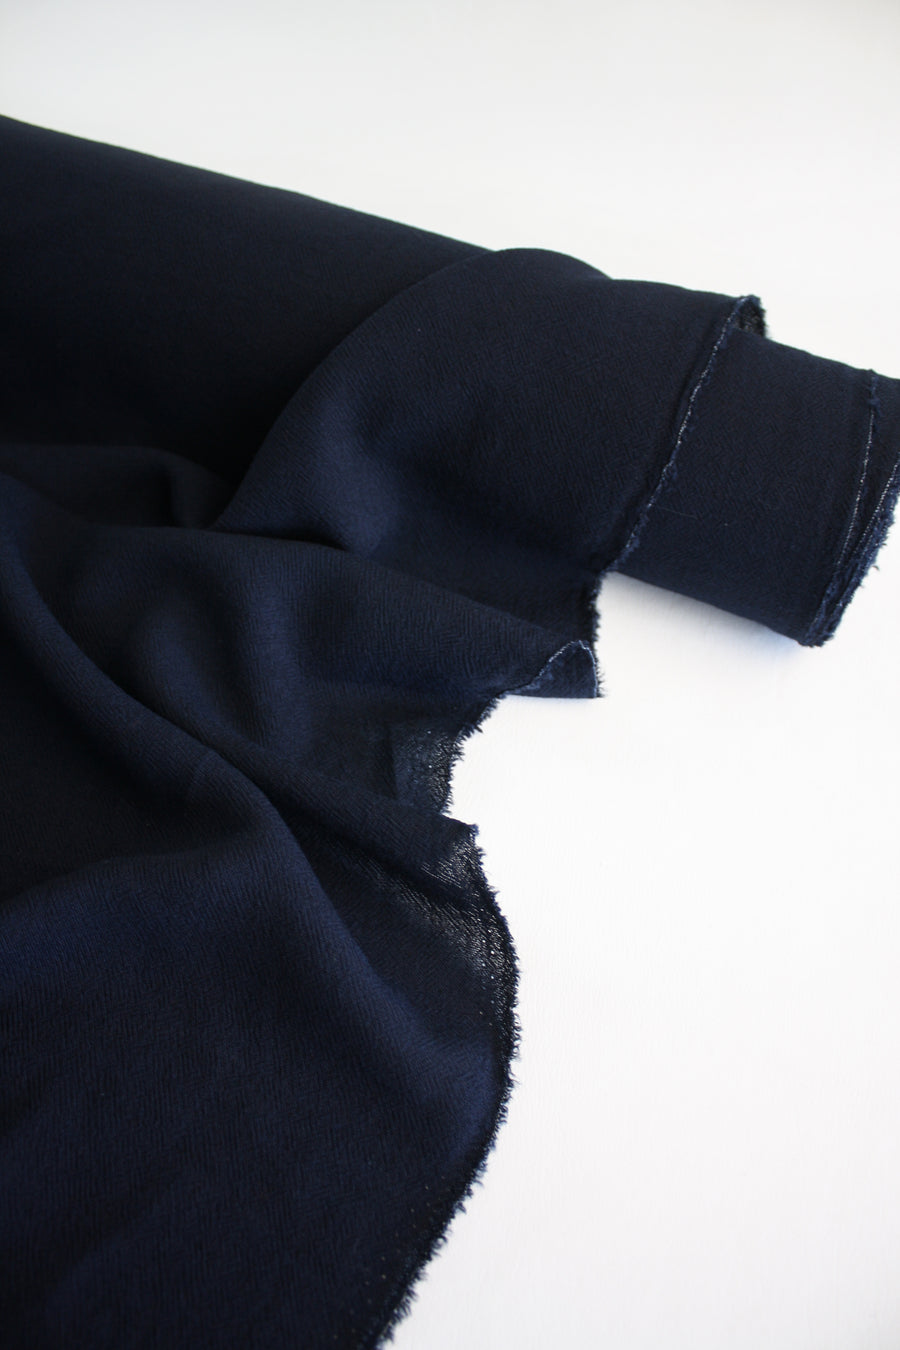 Ottorino - European Wool Crepe | Indigo